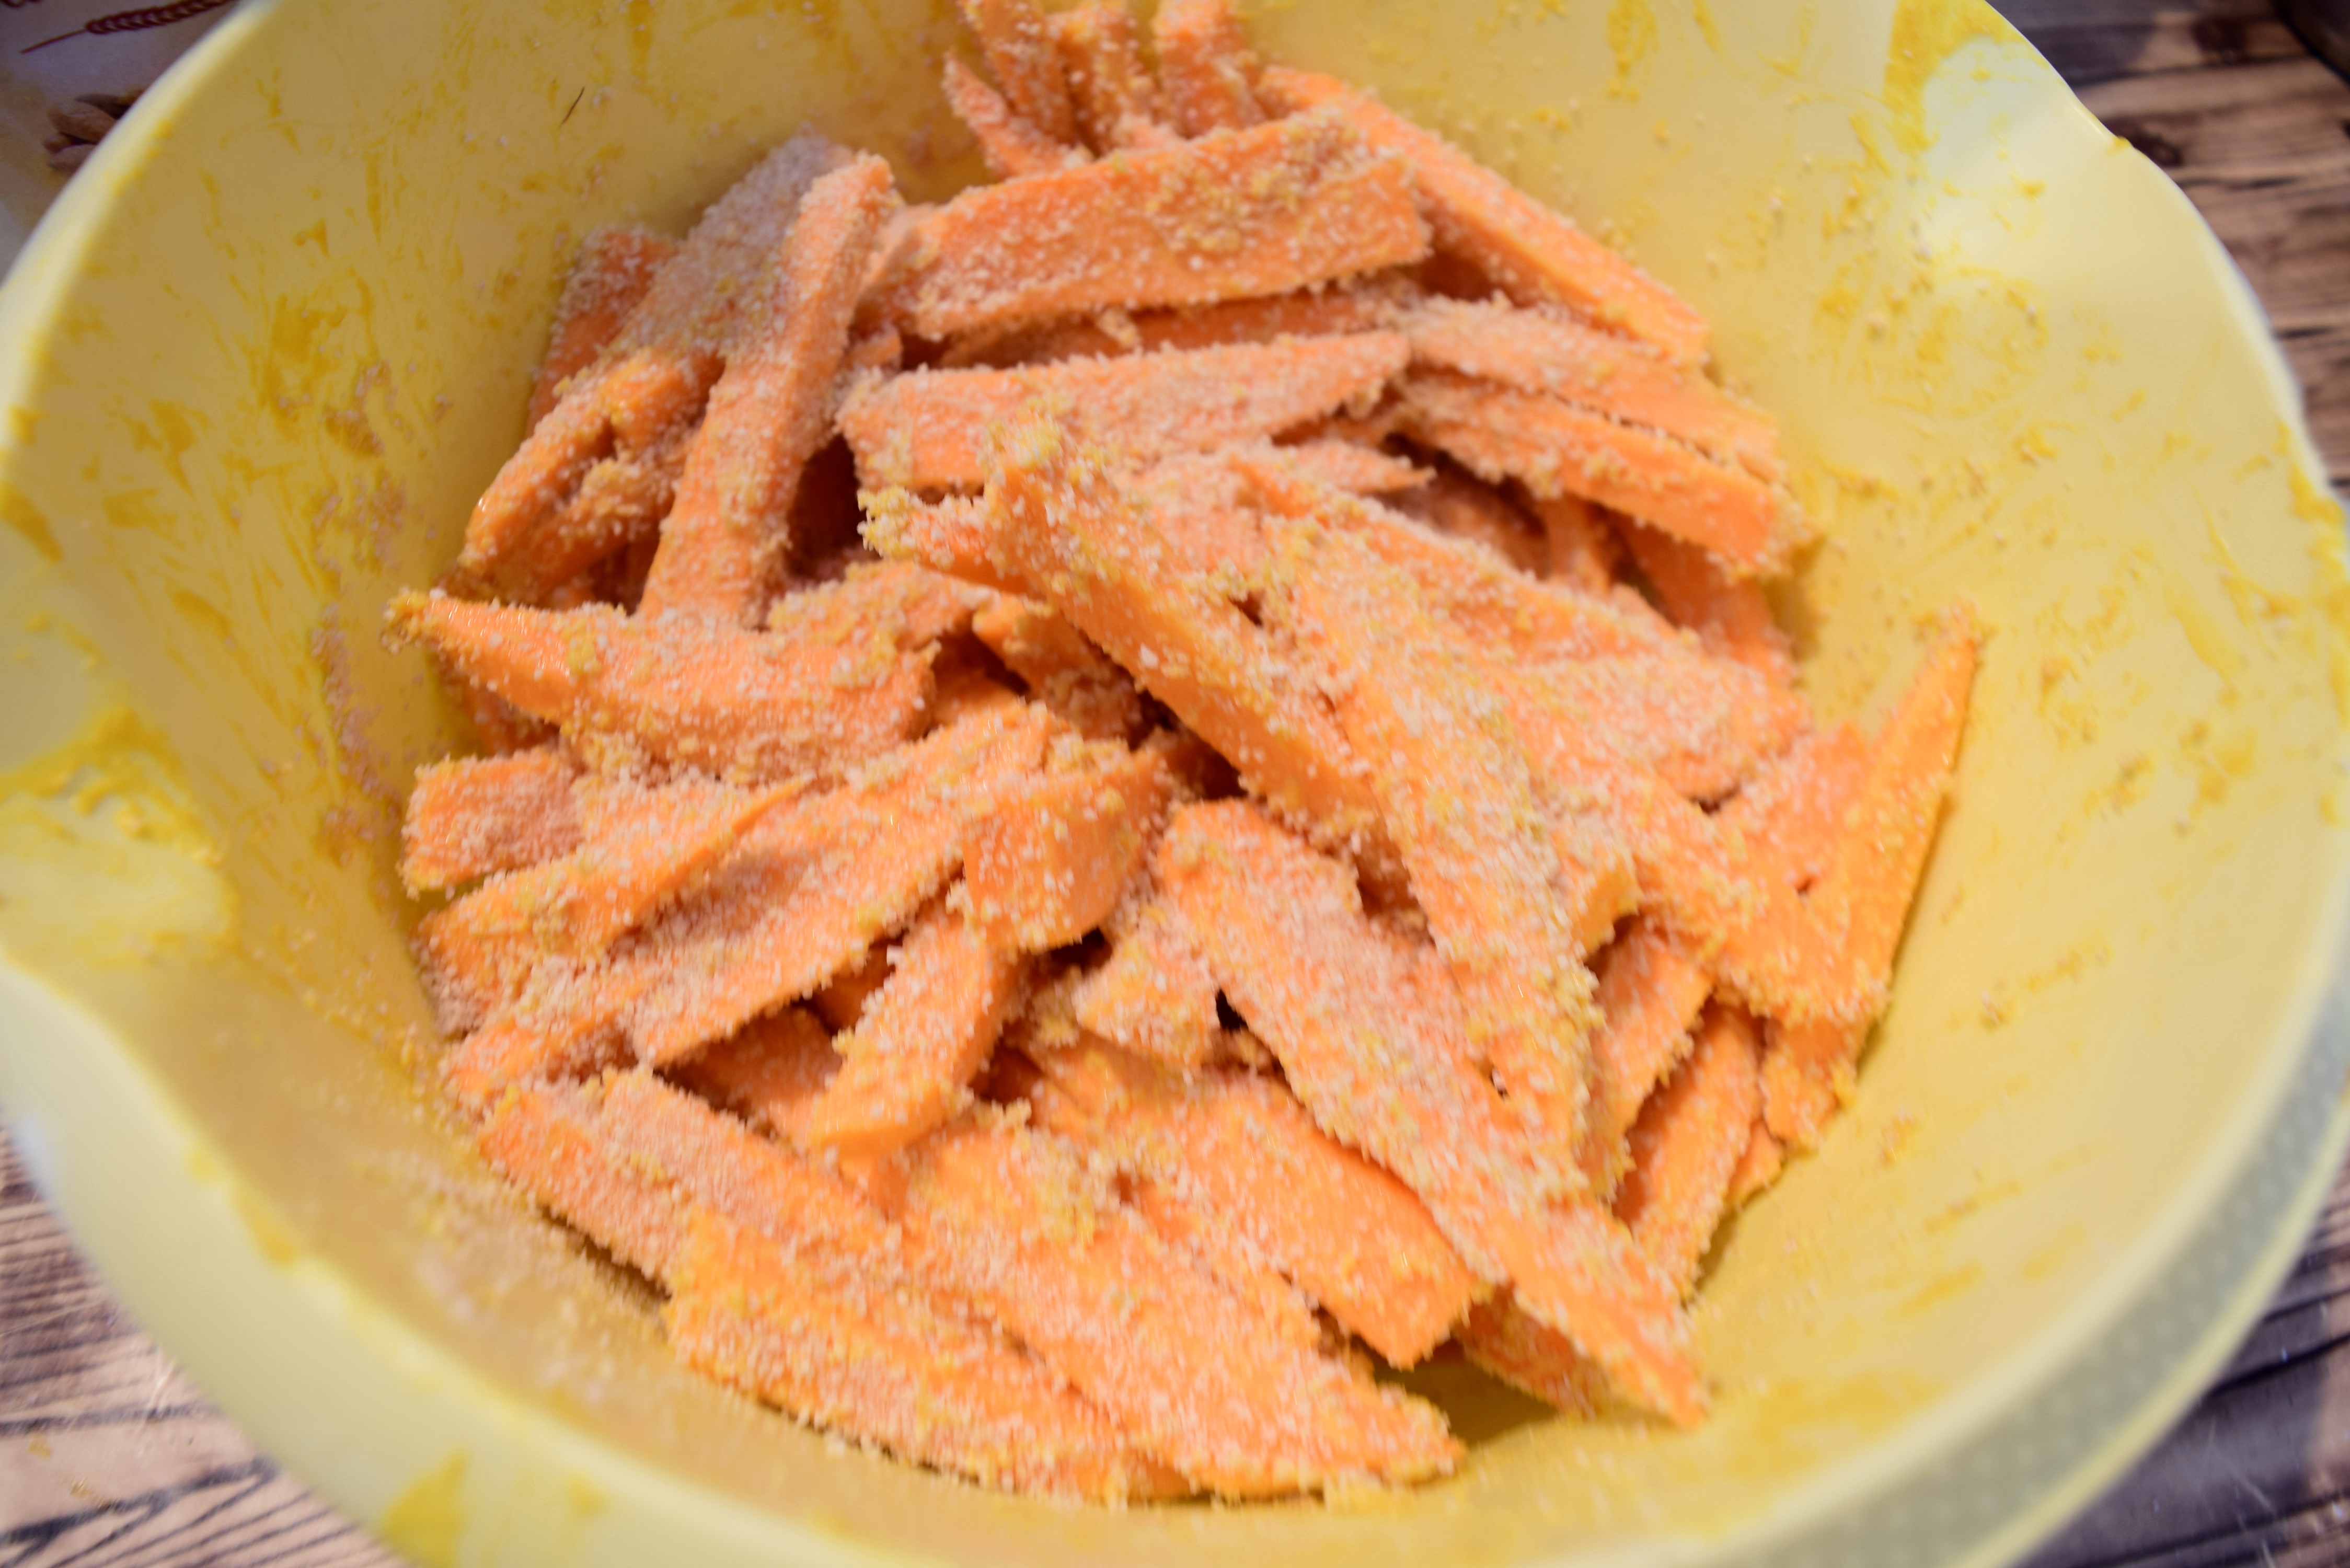 Cartofi dulci in crusta de mustar cu pesmet